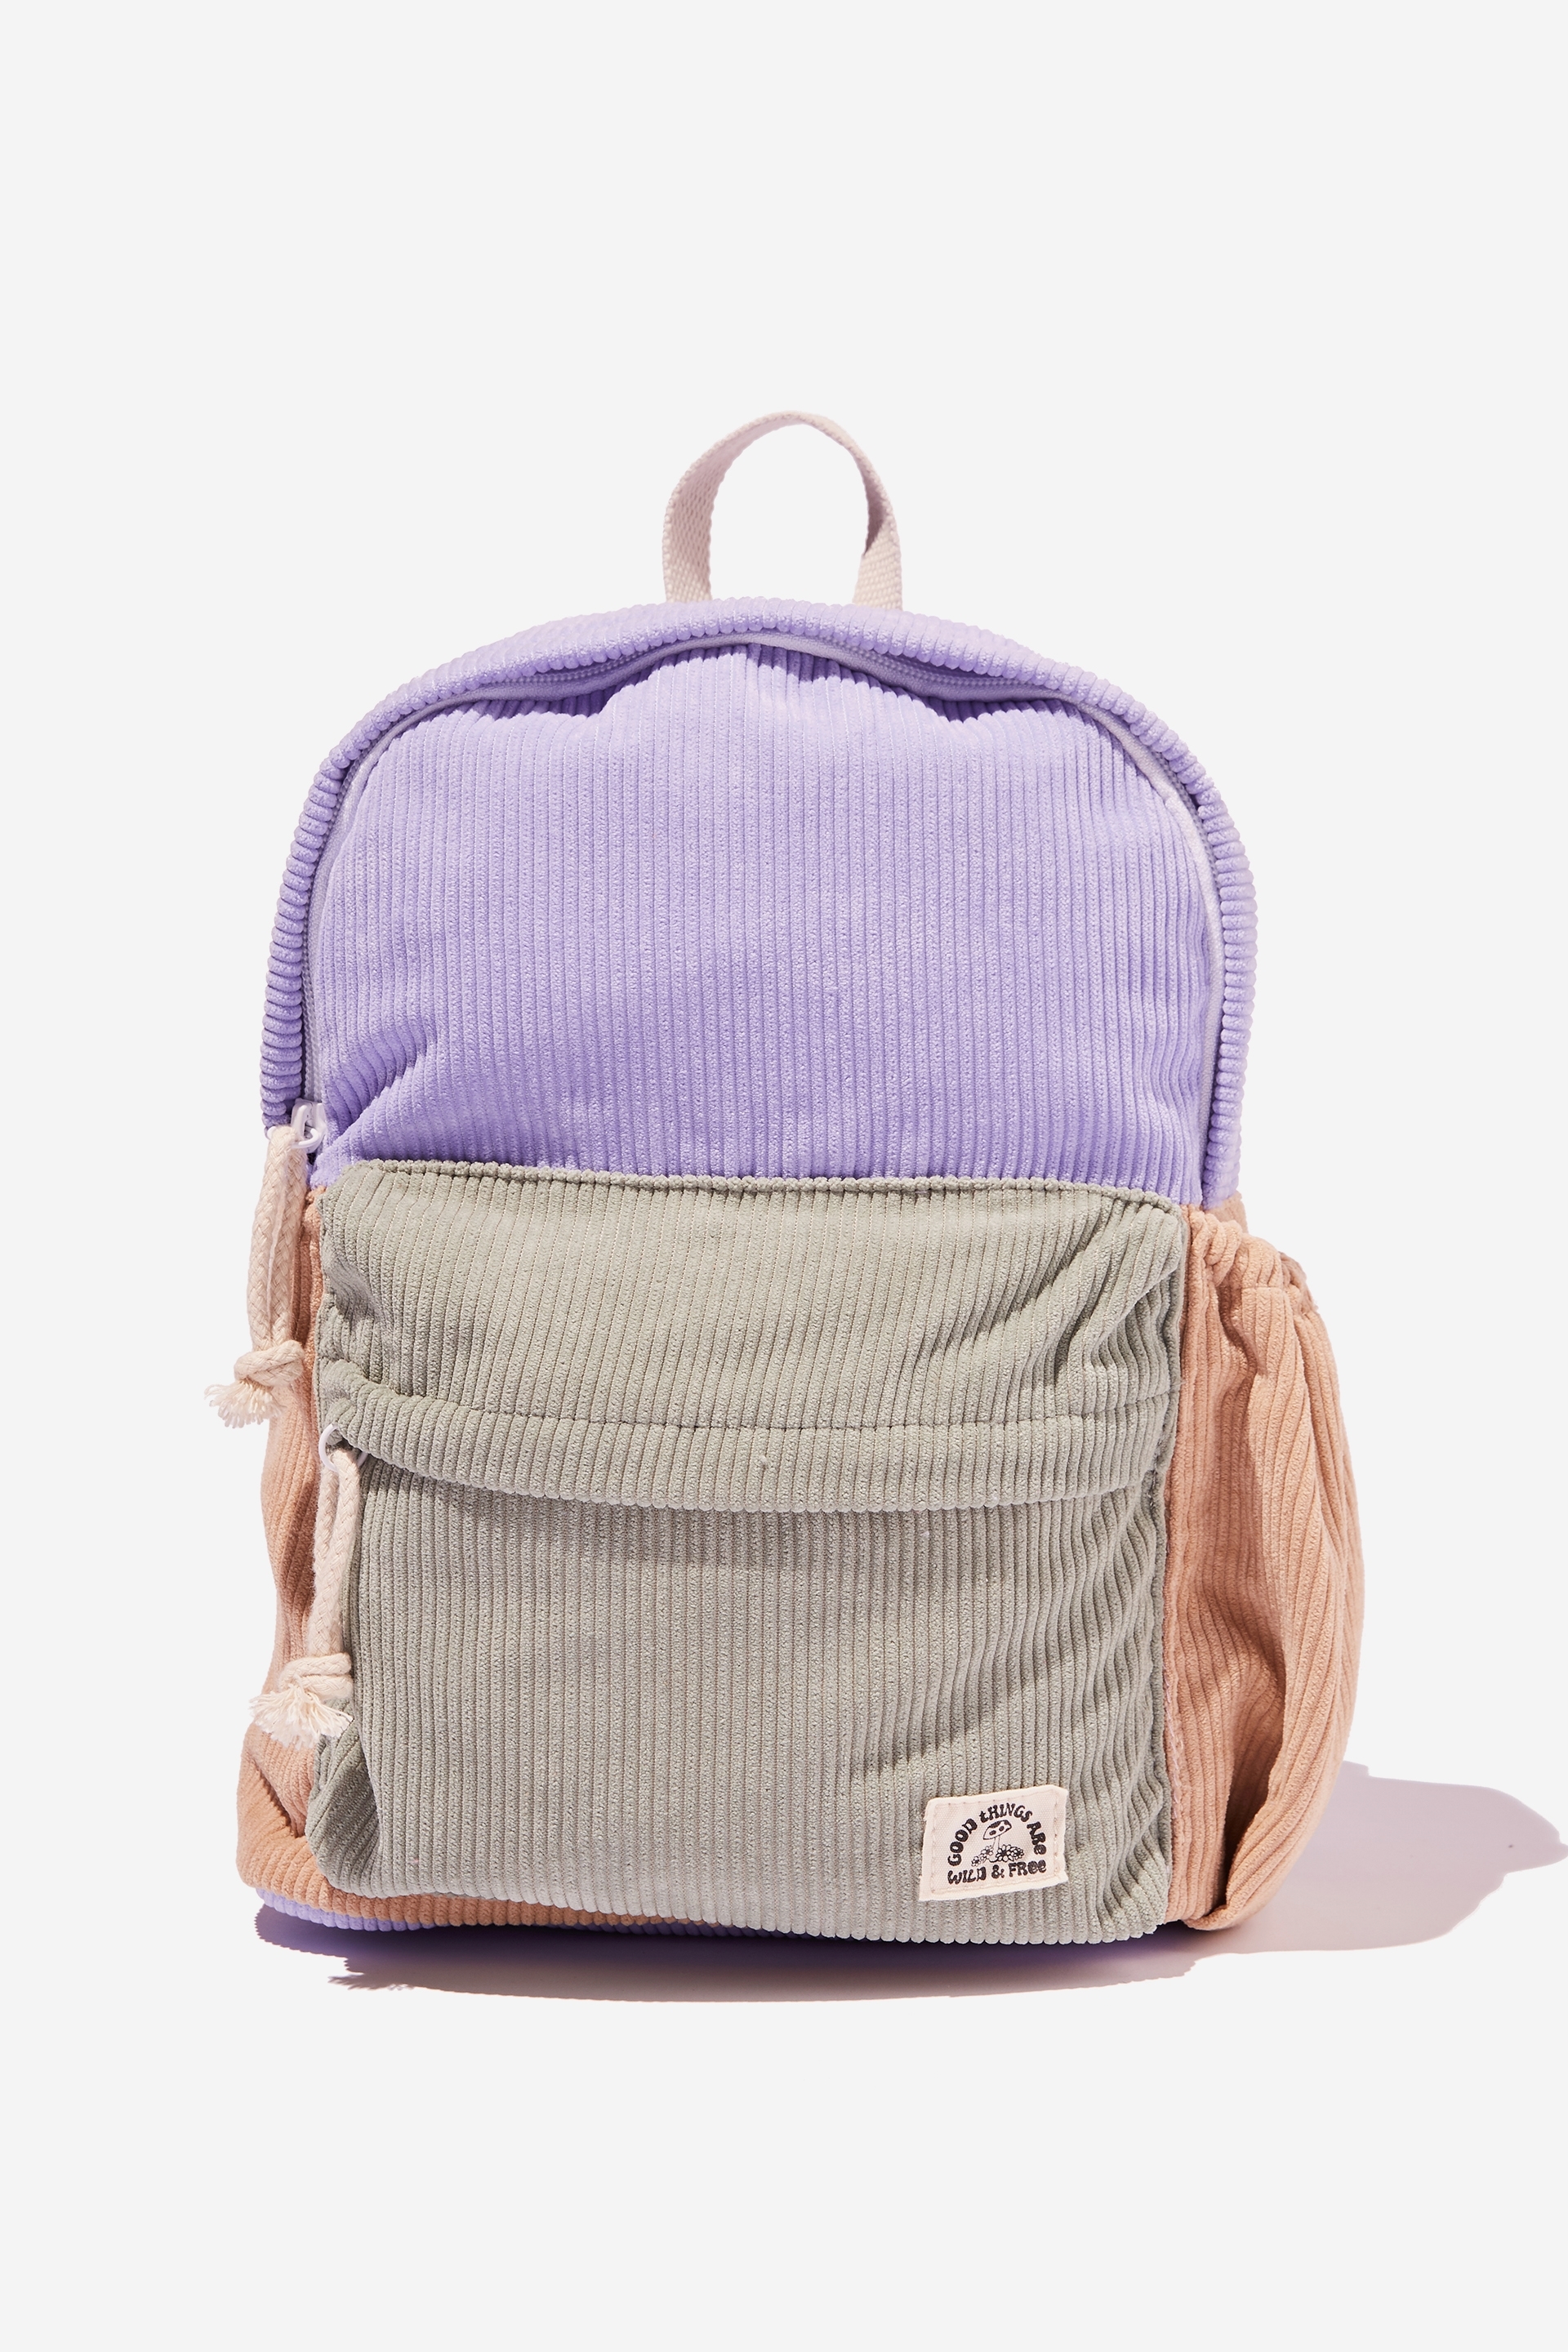 Cotton On Kids - Happy Camper Backpack - Grape soda/smashed avo